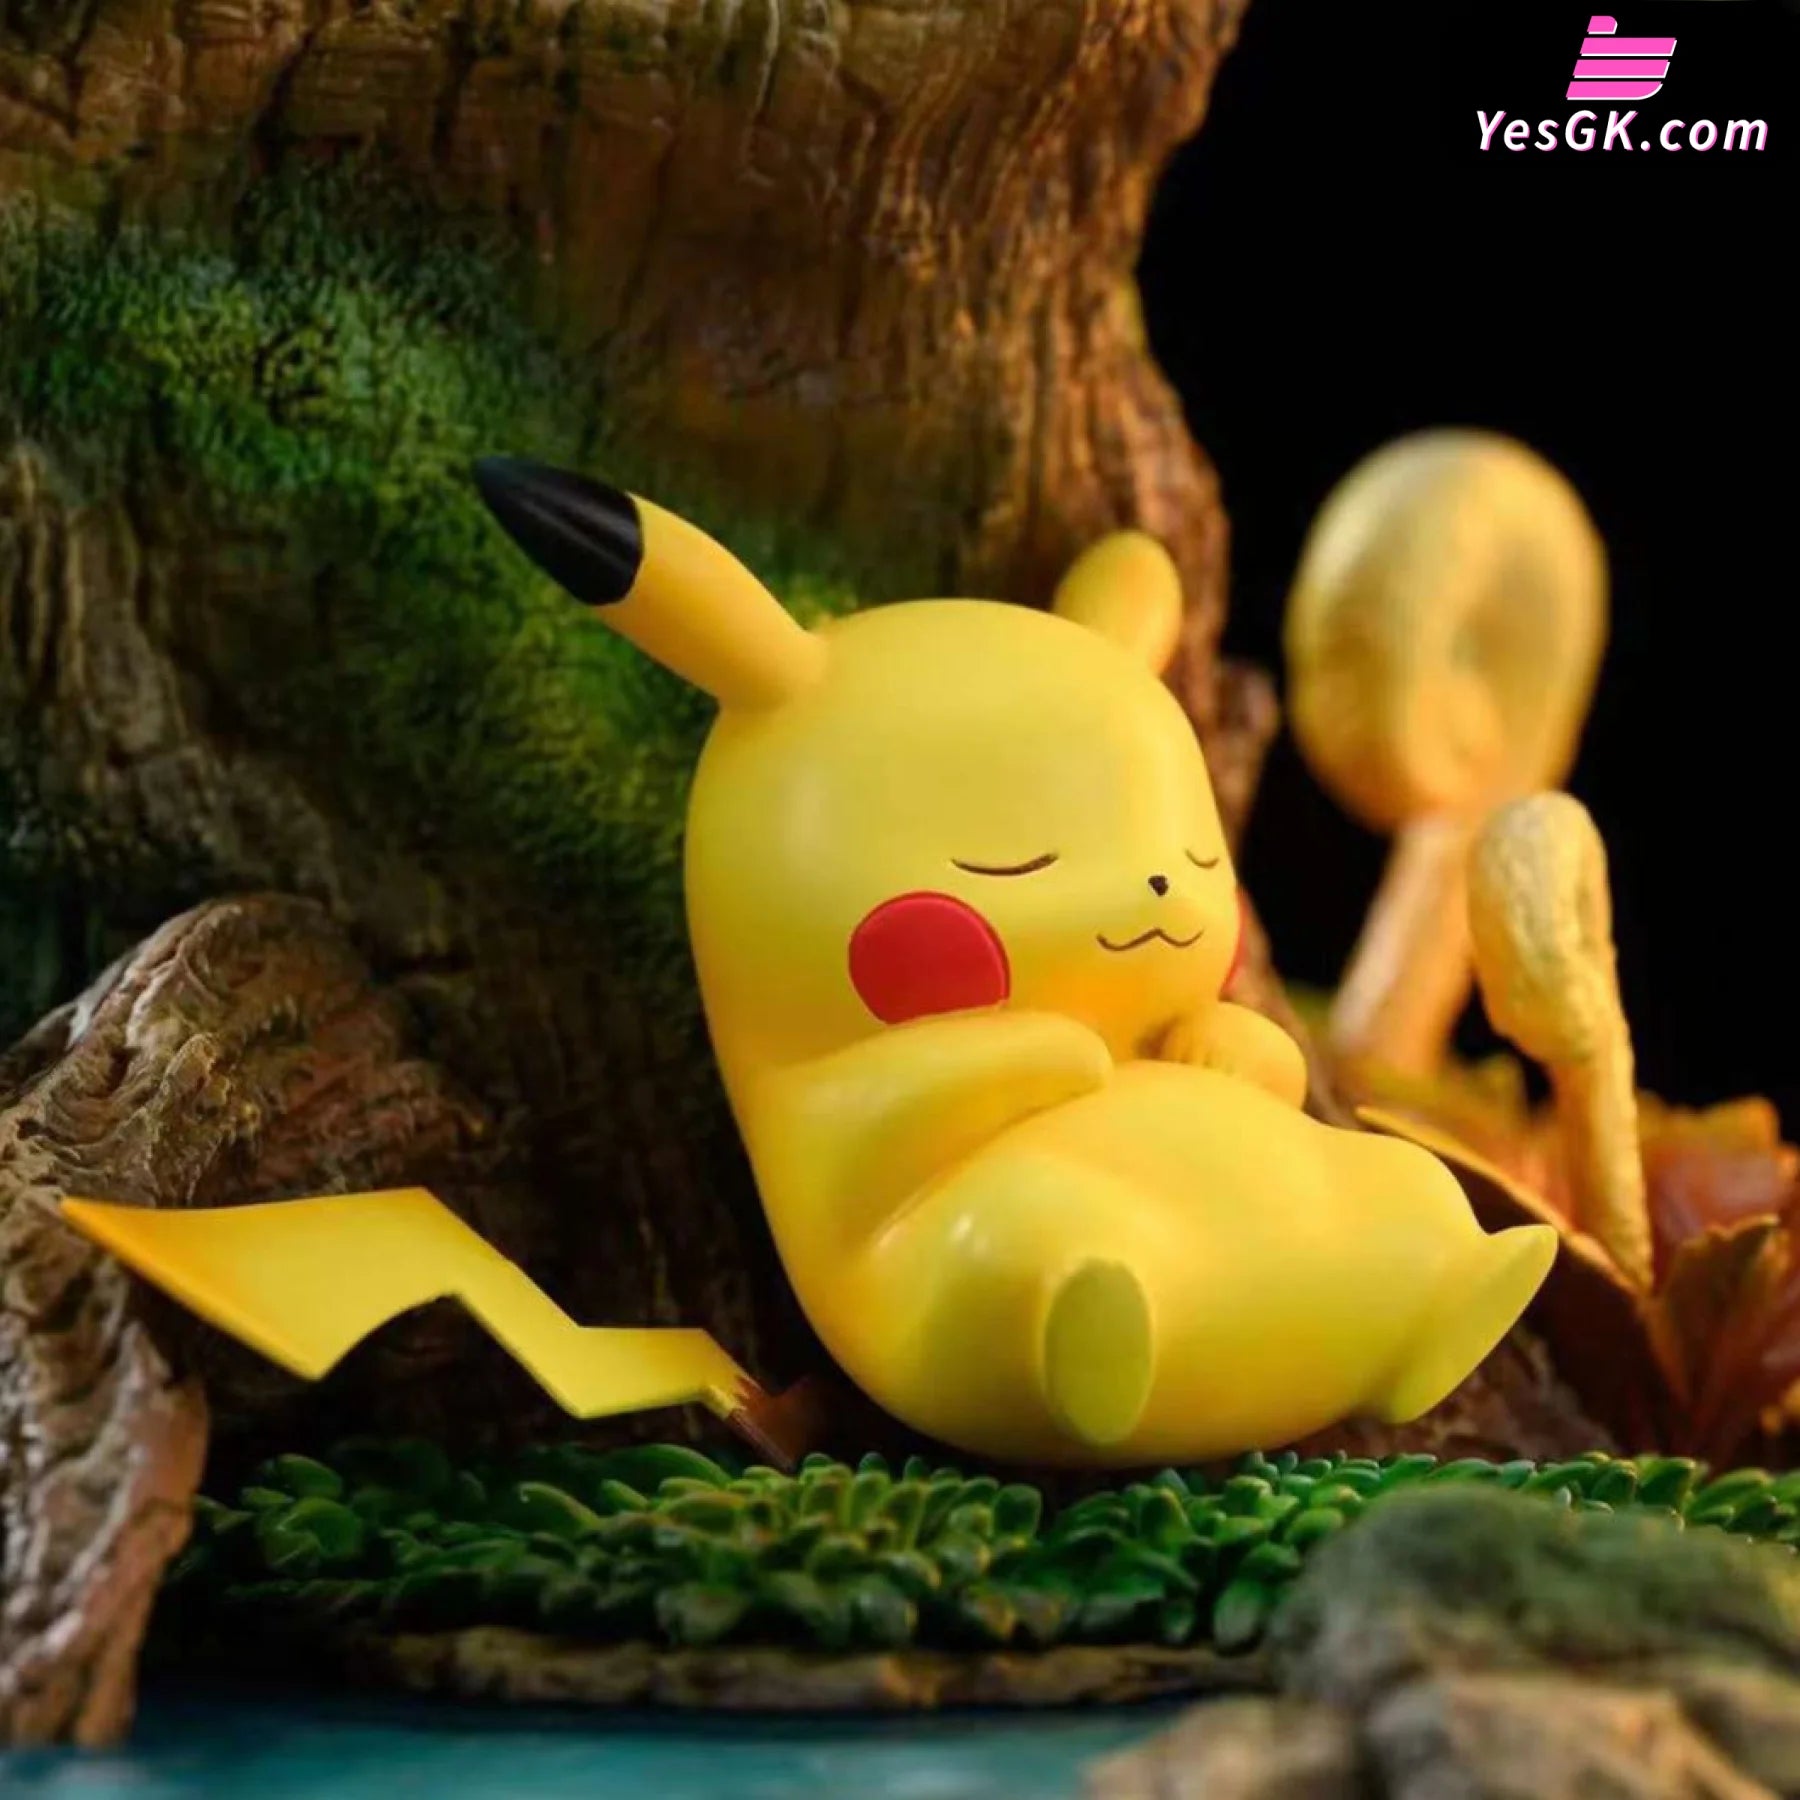 Pokémon Sleeping Pikachu Statue - Dm Studio [Pre-Order]